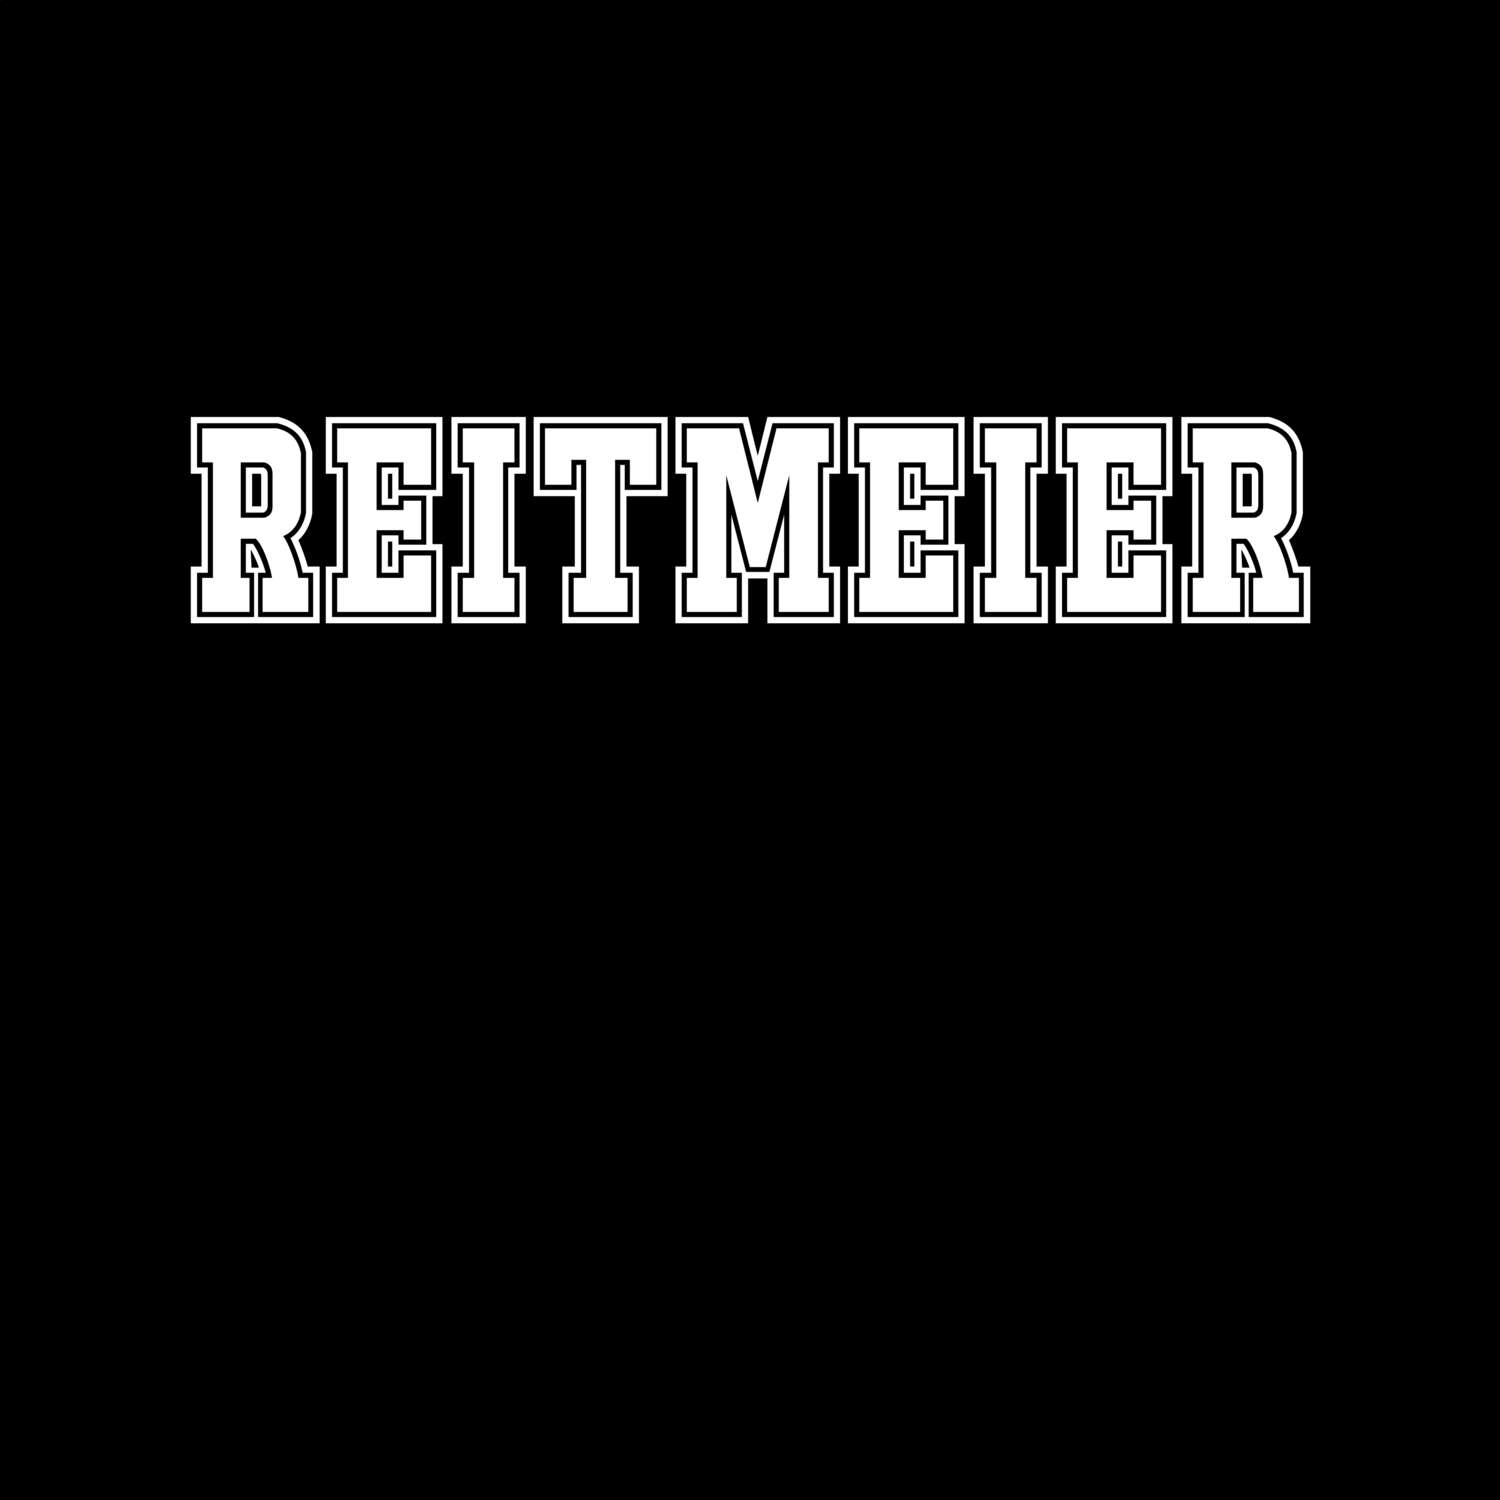 Reitmeier T-Shirt »Classic«